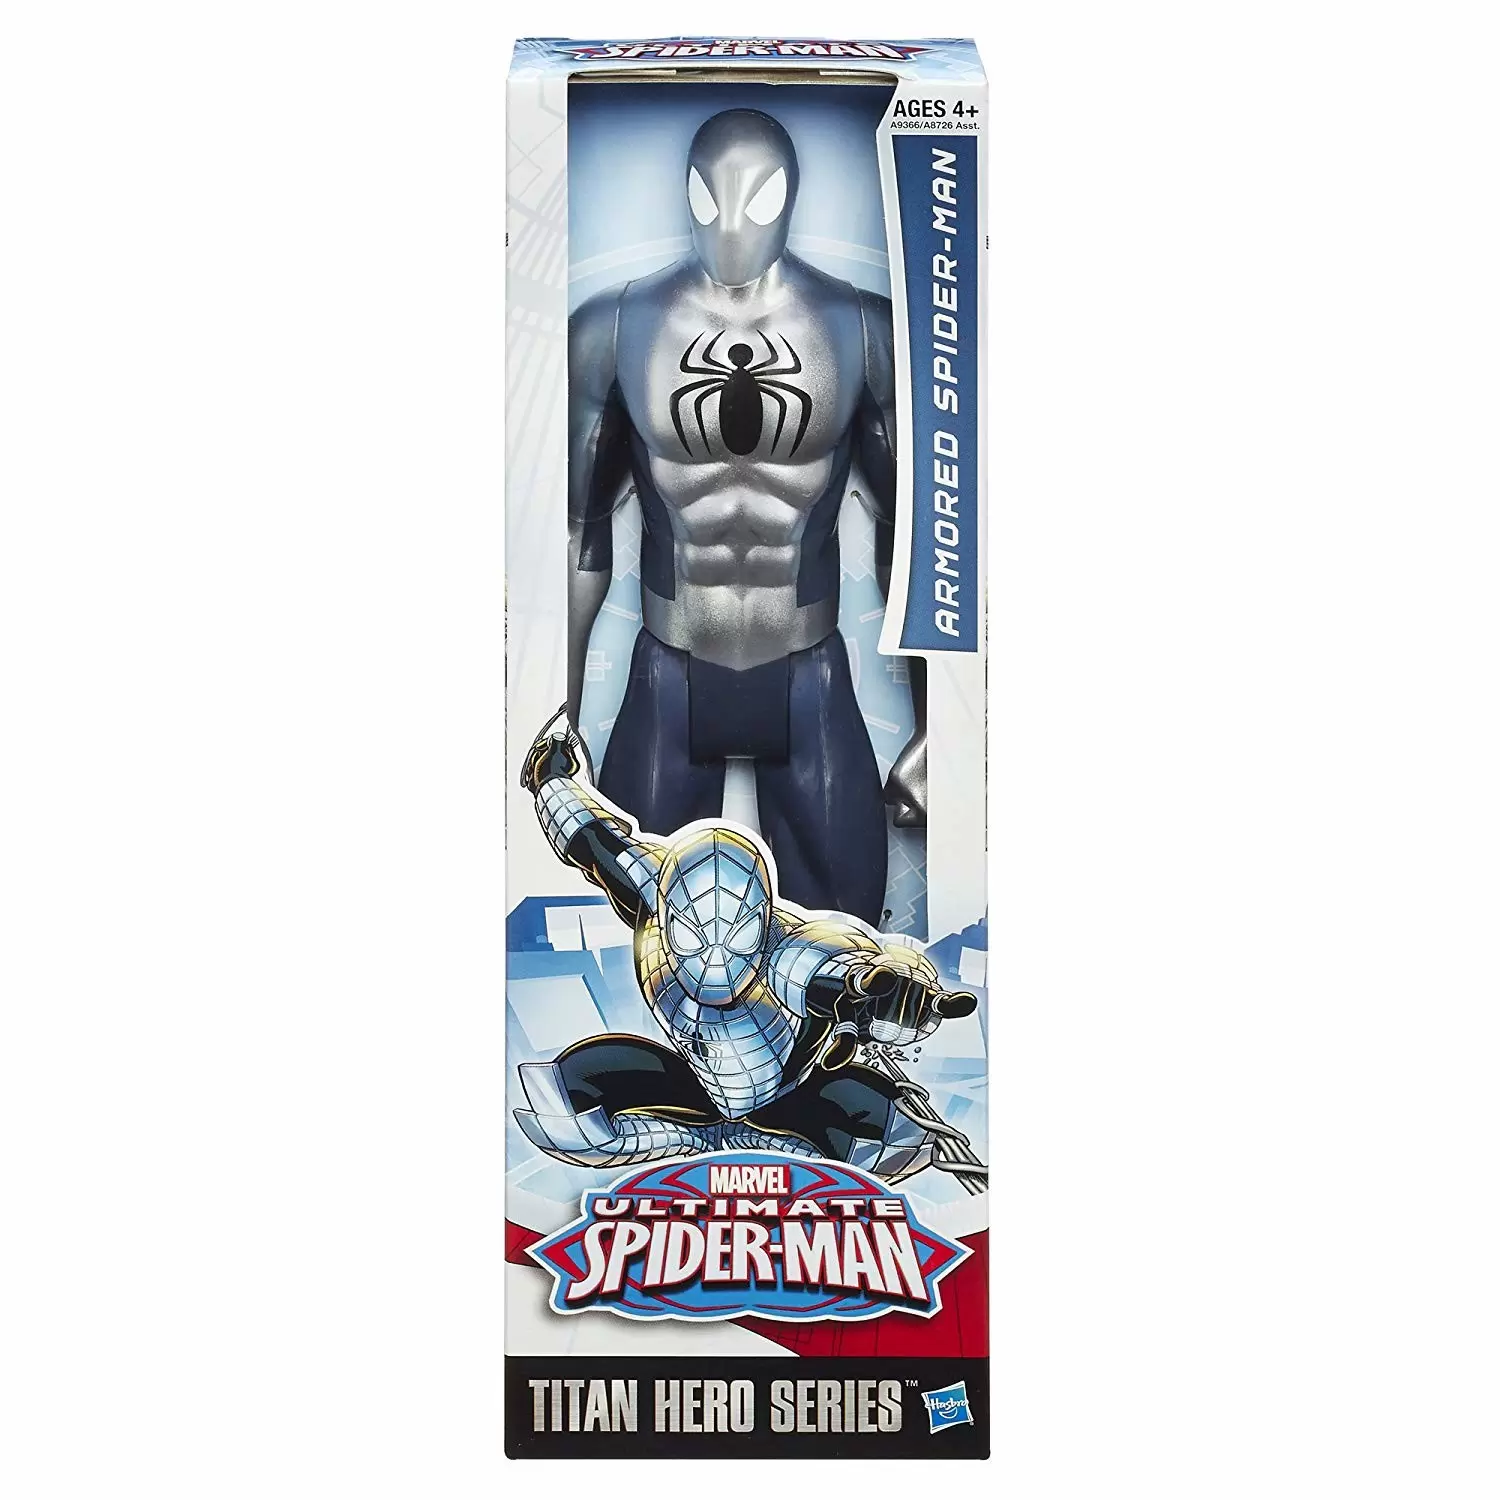 Titan Hero Series - Armored Spider-Man